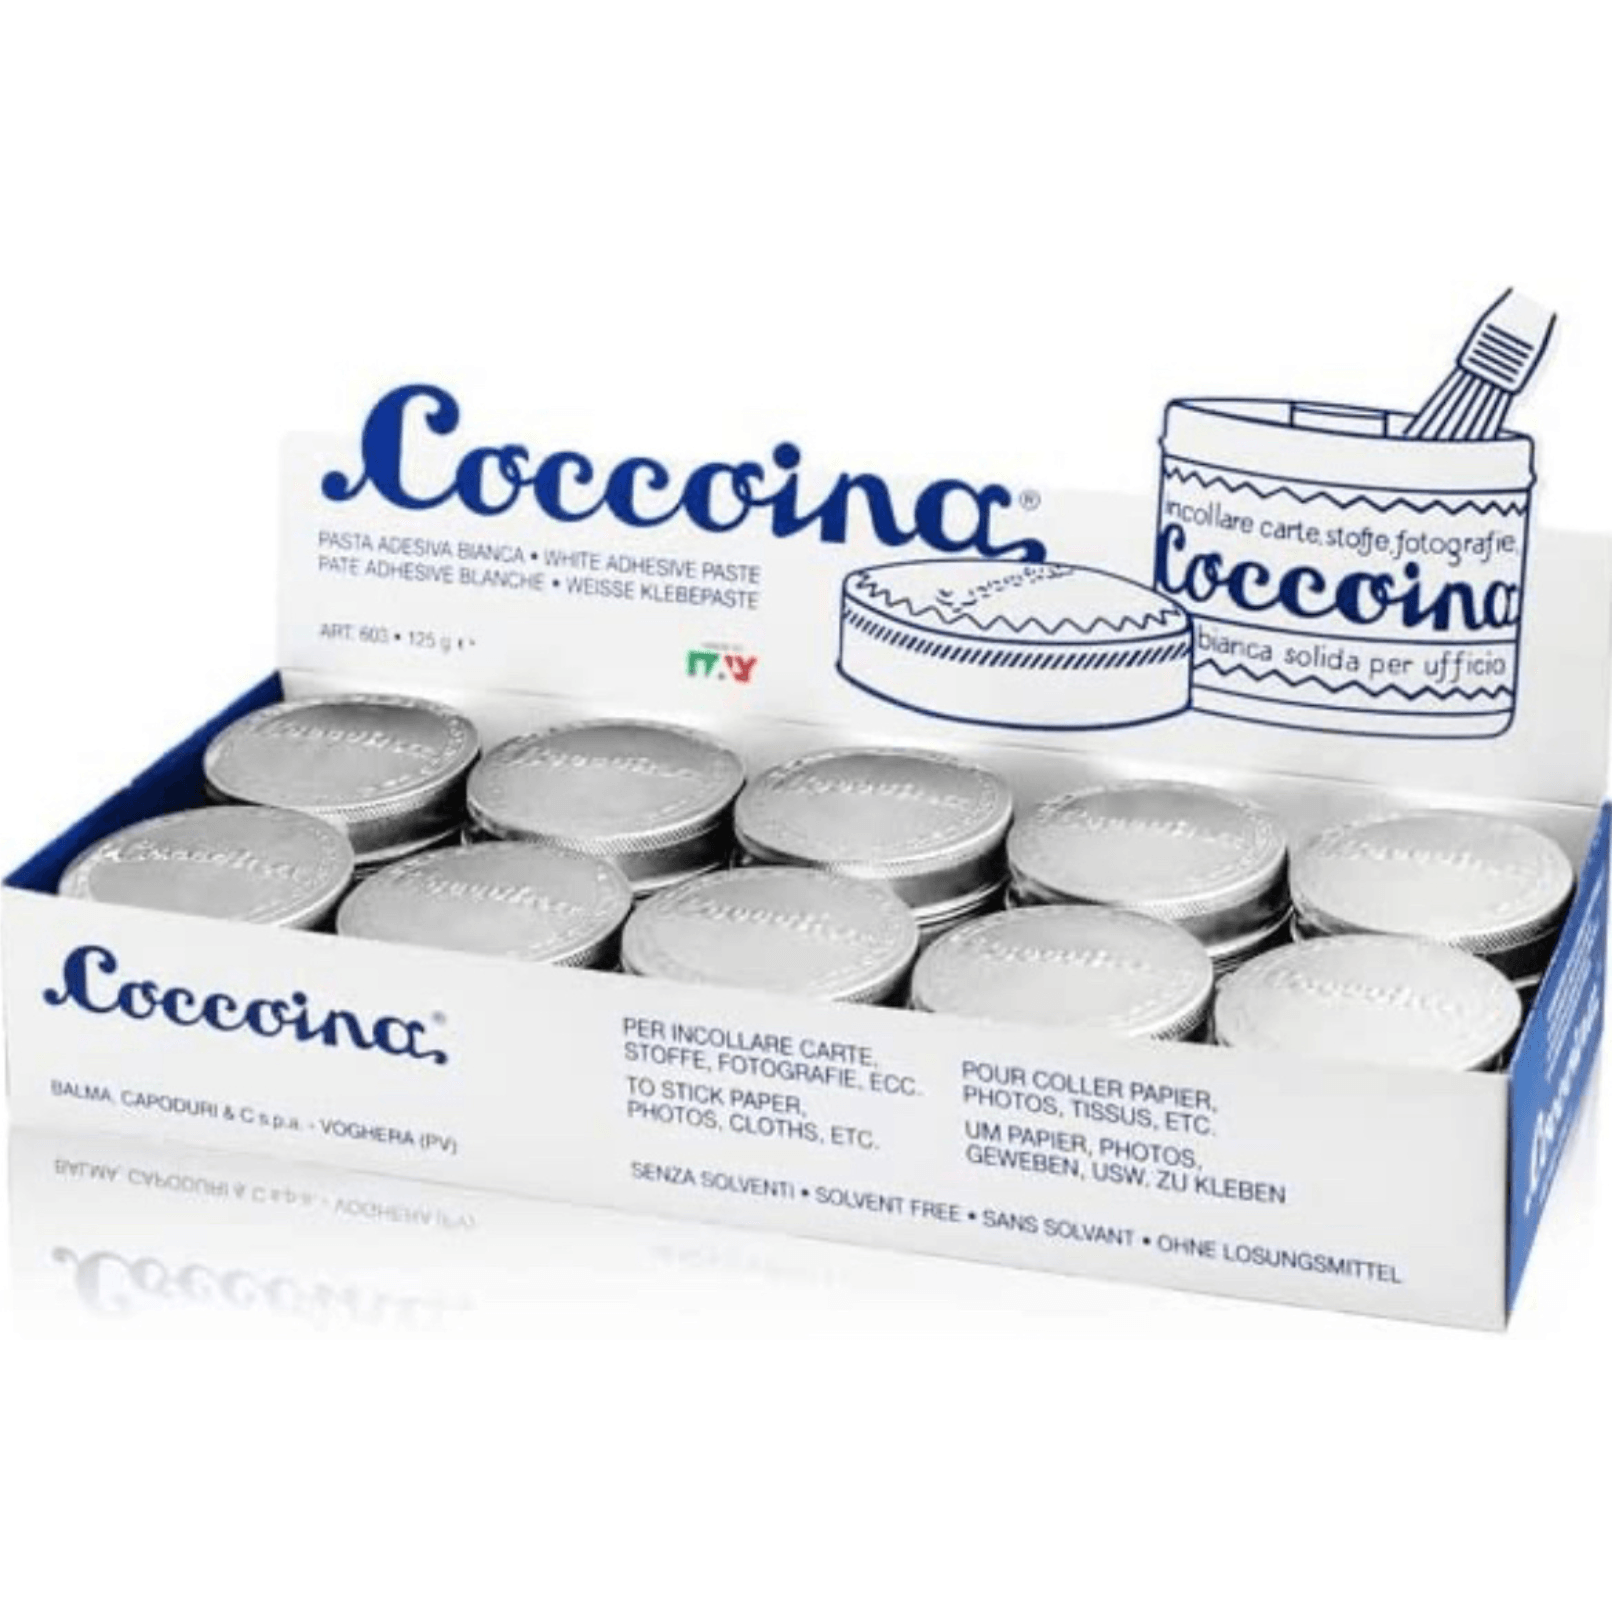 Coccoina Adhesive Paste